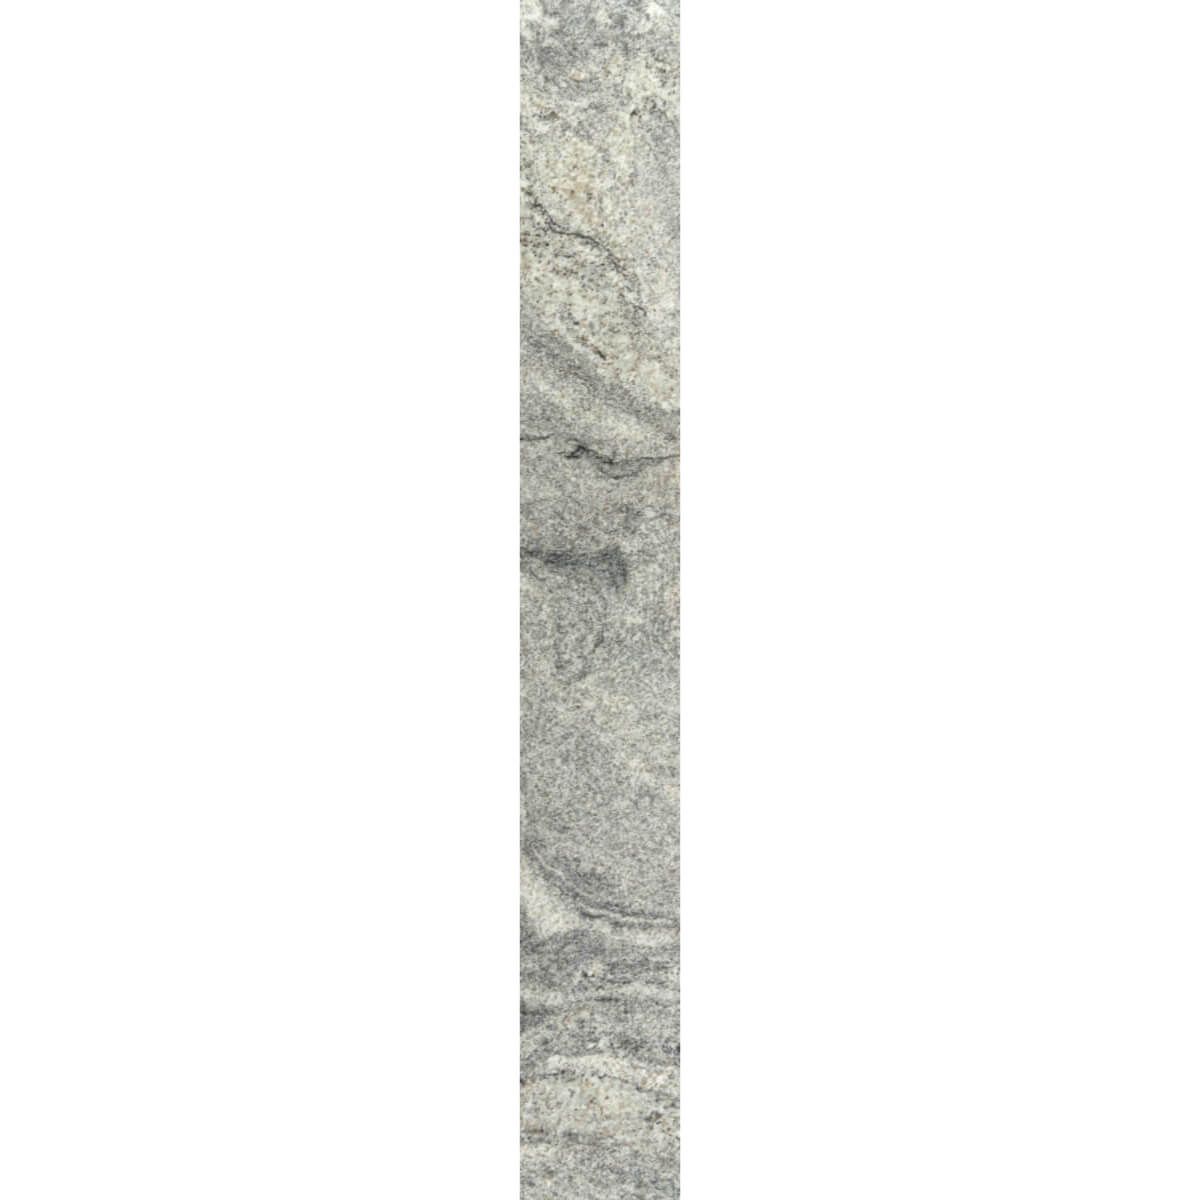 Podstopień granitowy Royal Juparana polerowany 150x16,5x2 cm